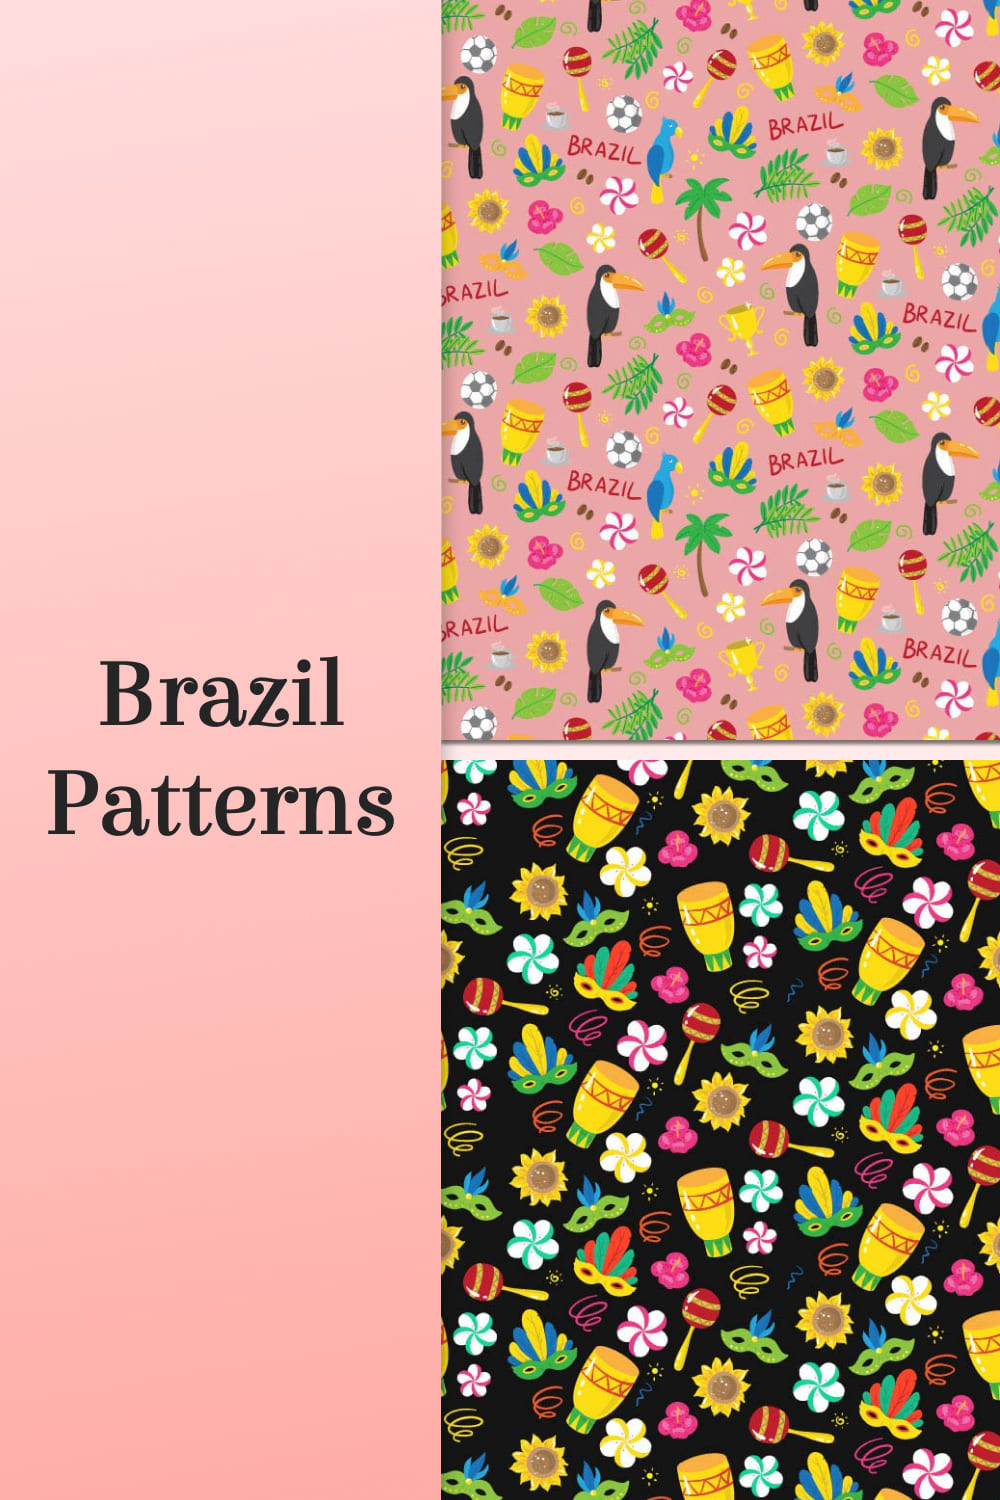 Brazil patterns - pinterest image preview.